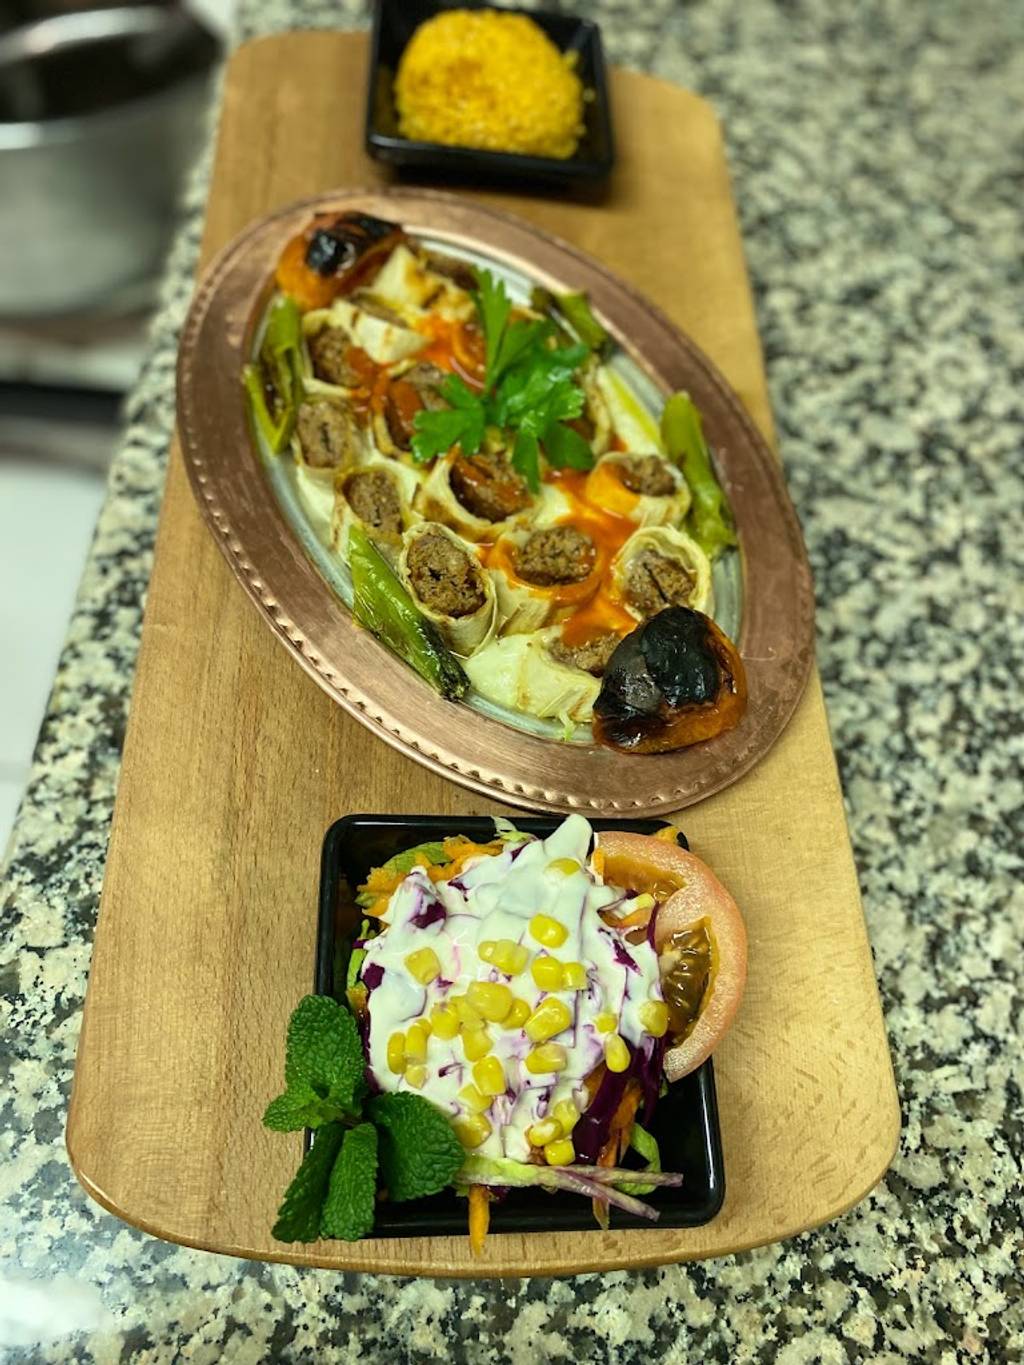 Palace Restaurants Grill Halal turc Vénissieux - Food Tableware Recipe Ingredient Staple food